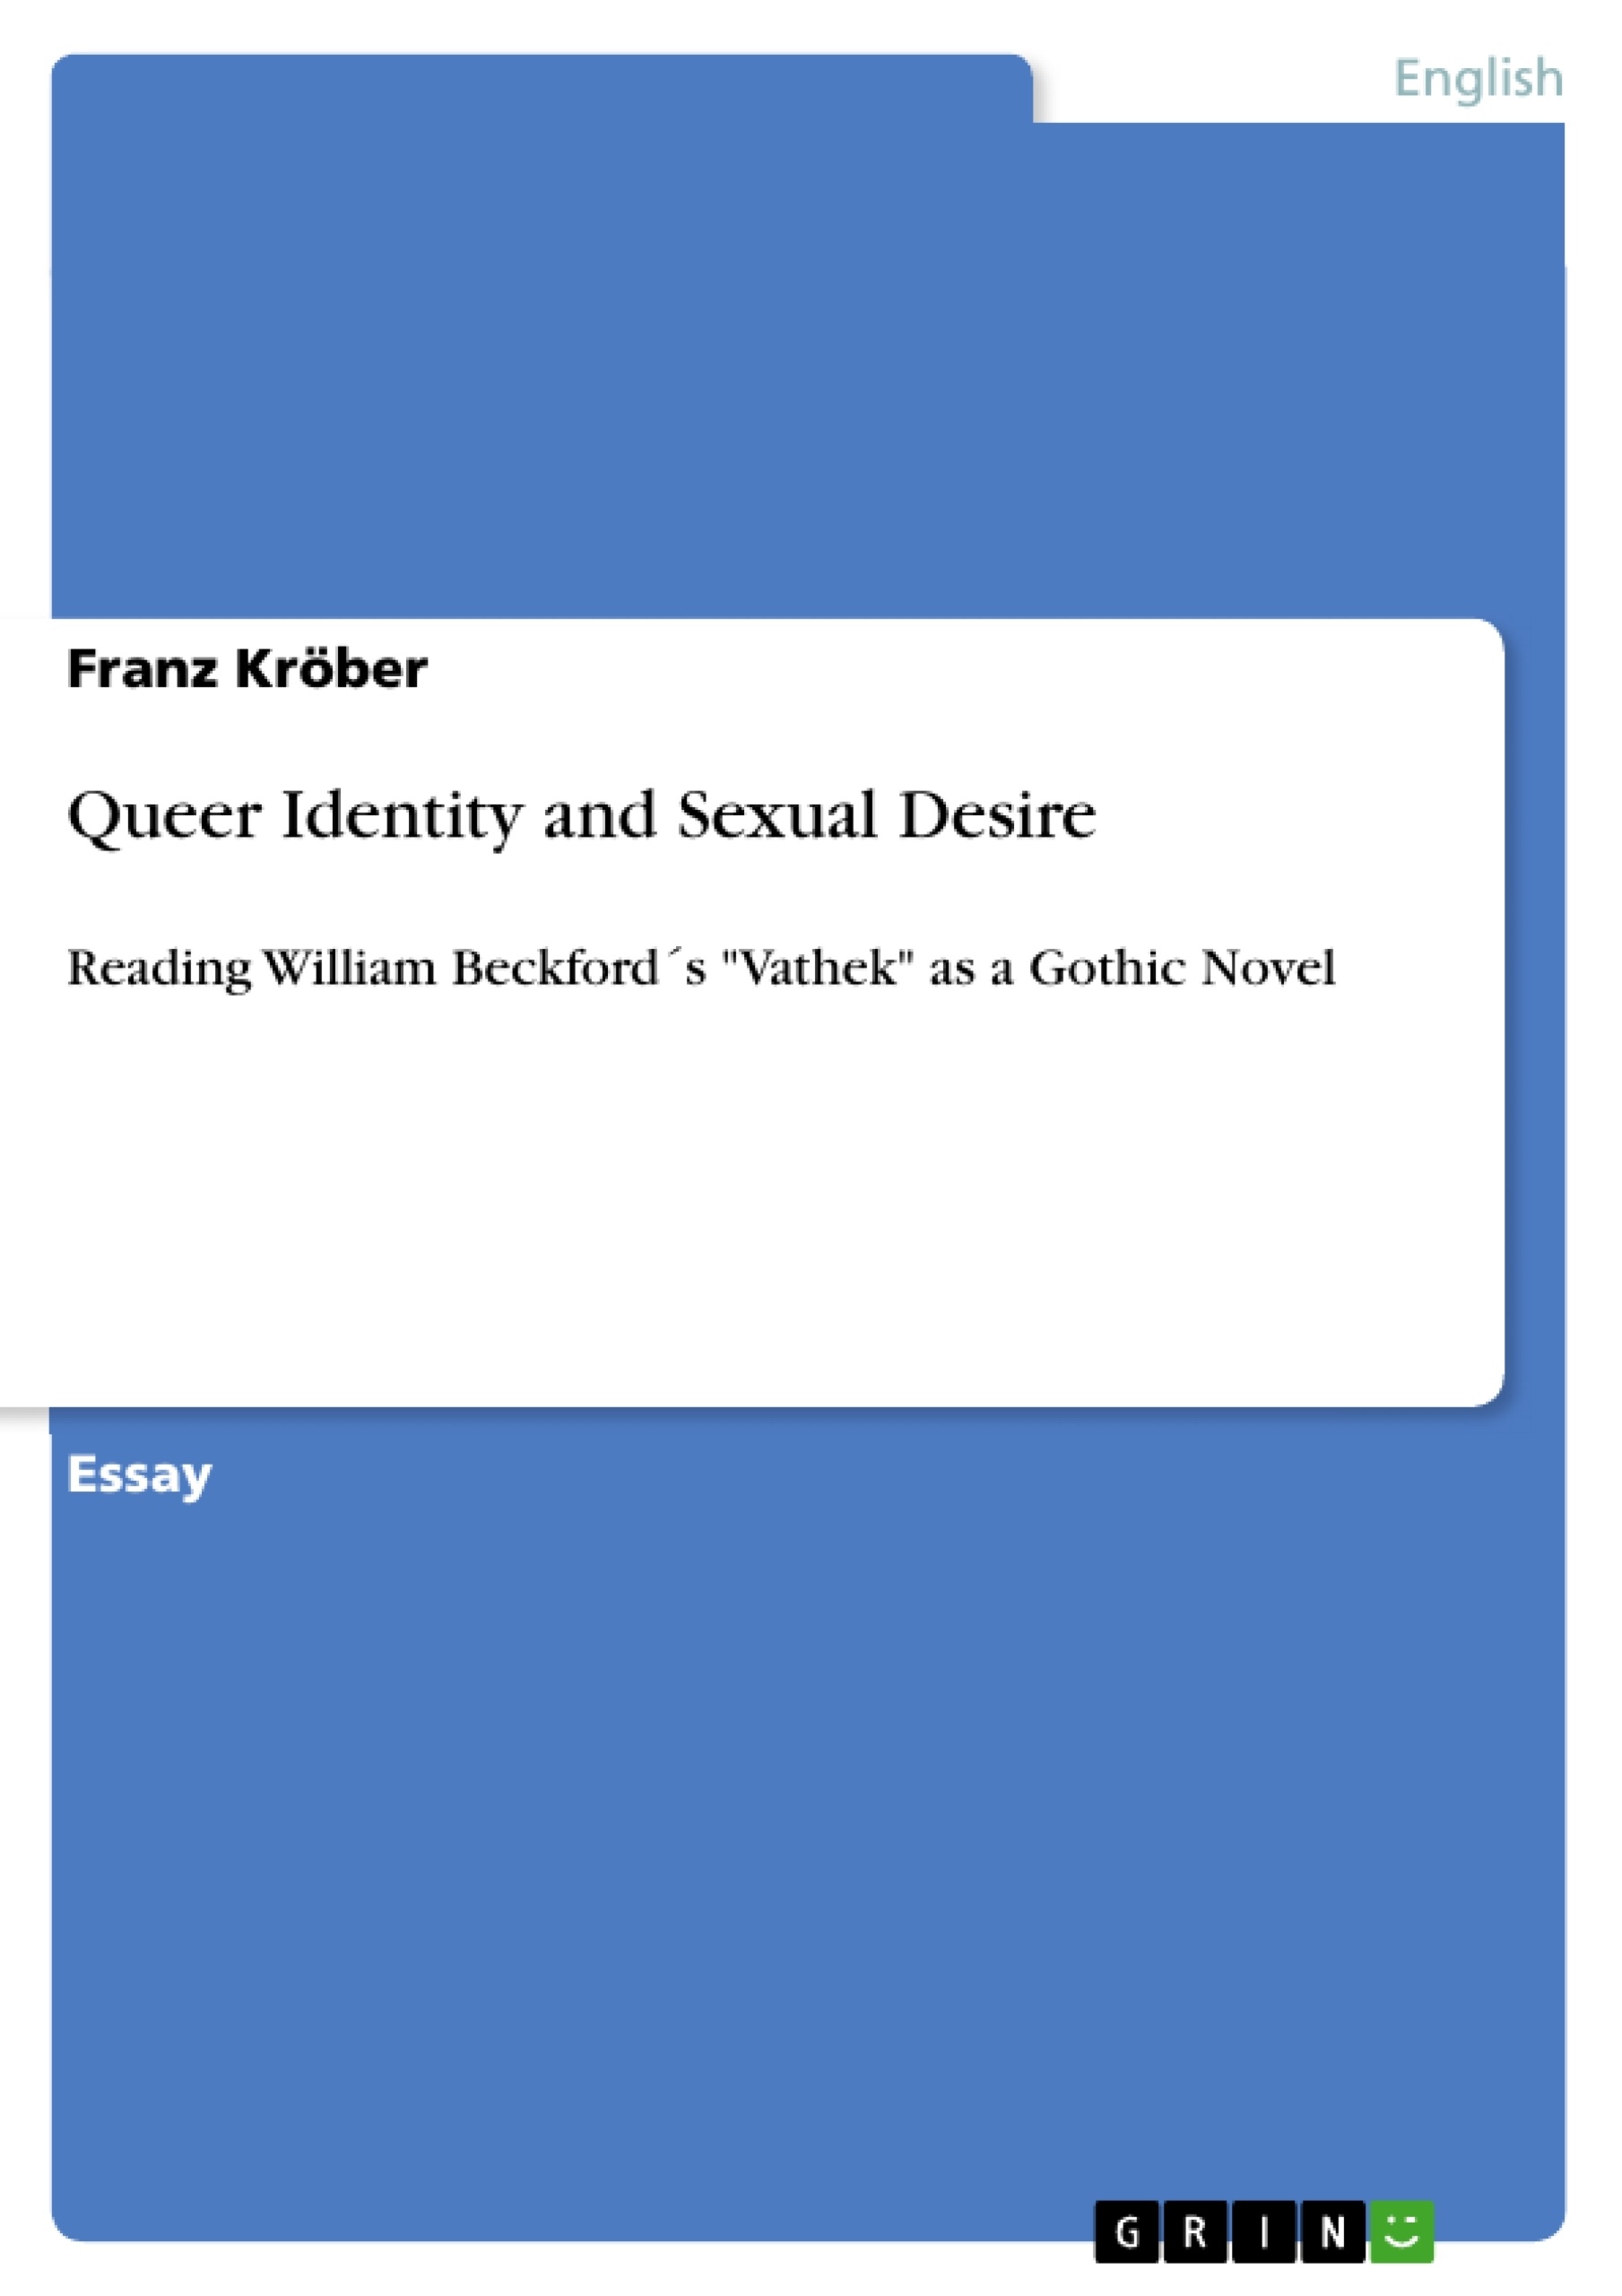 Título: Queer Identity and Sexual Desire